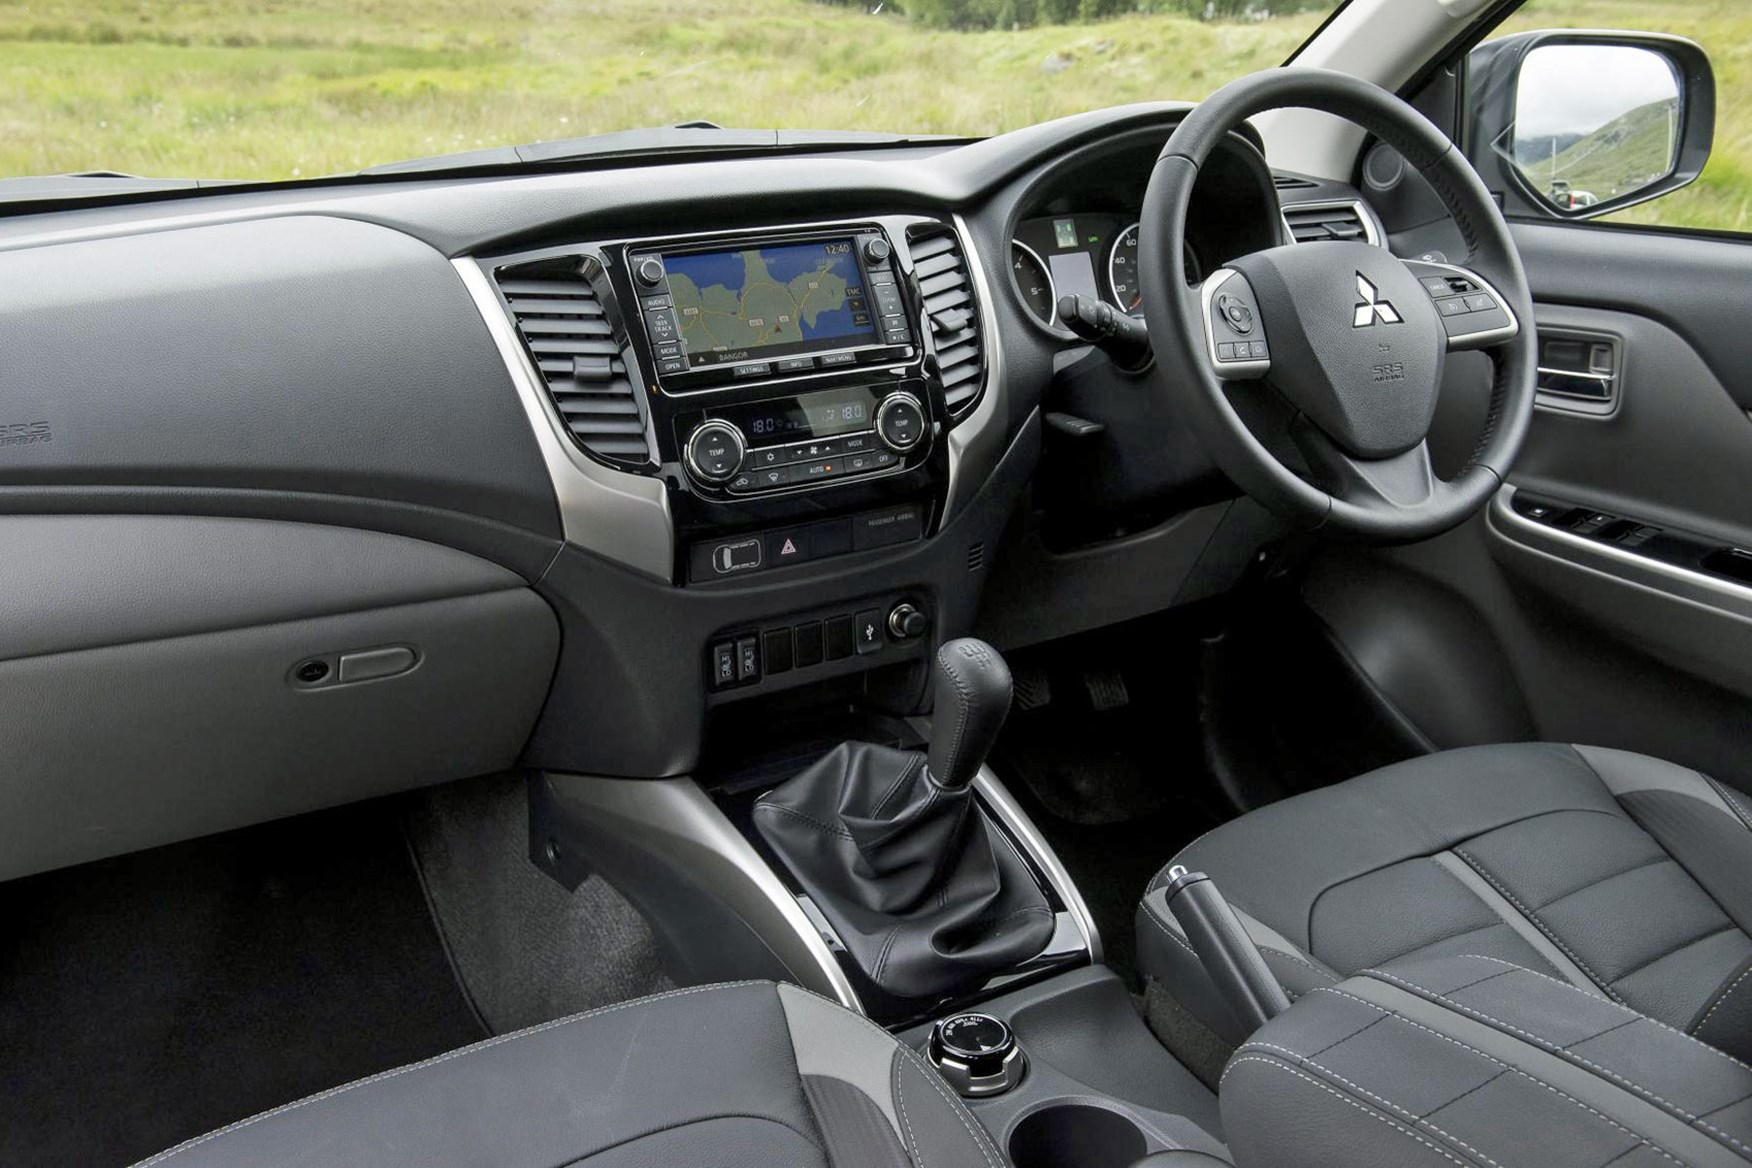 Mitsubishi L200, cab interior, lifestyle with touchscreen